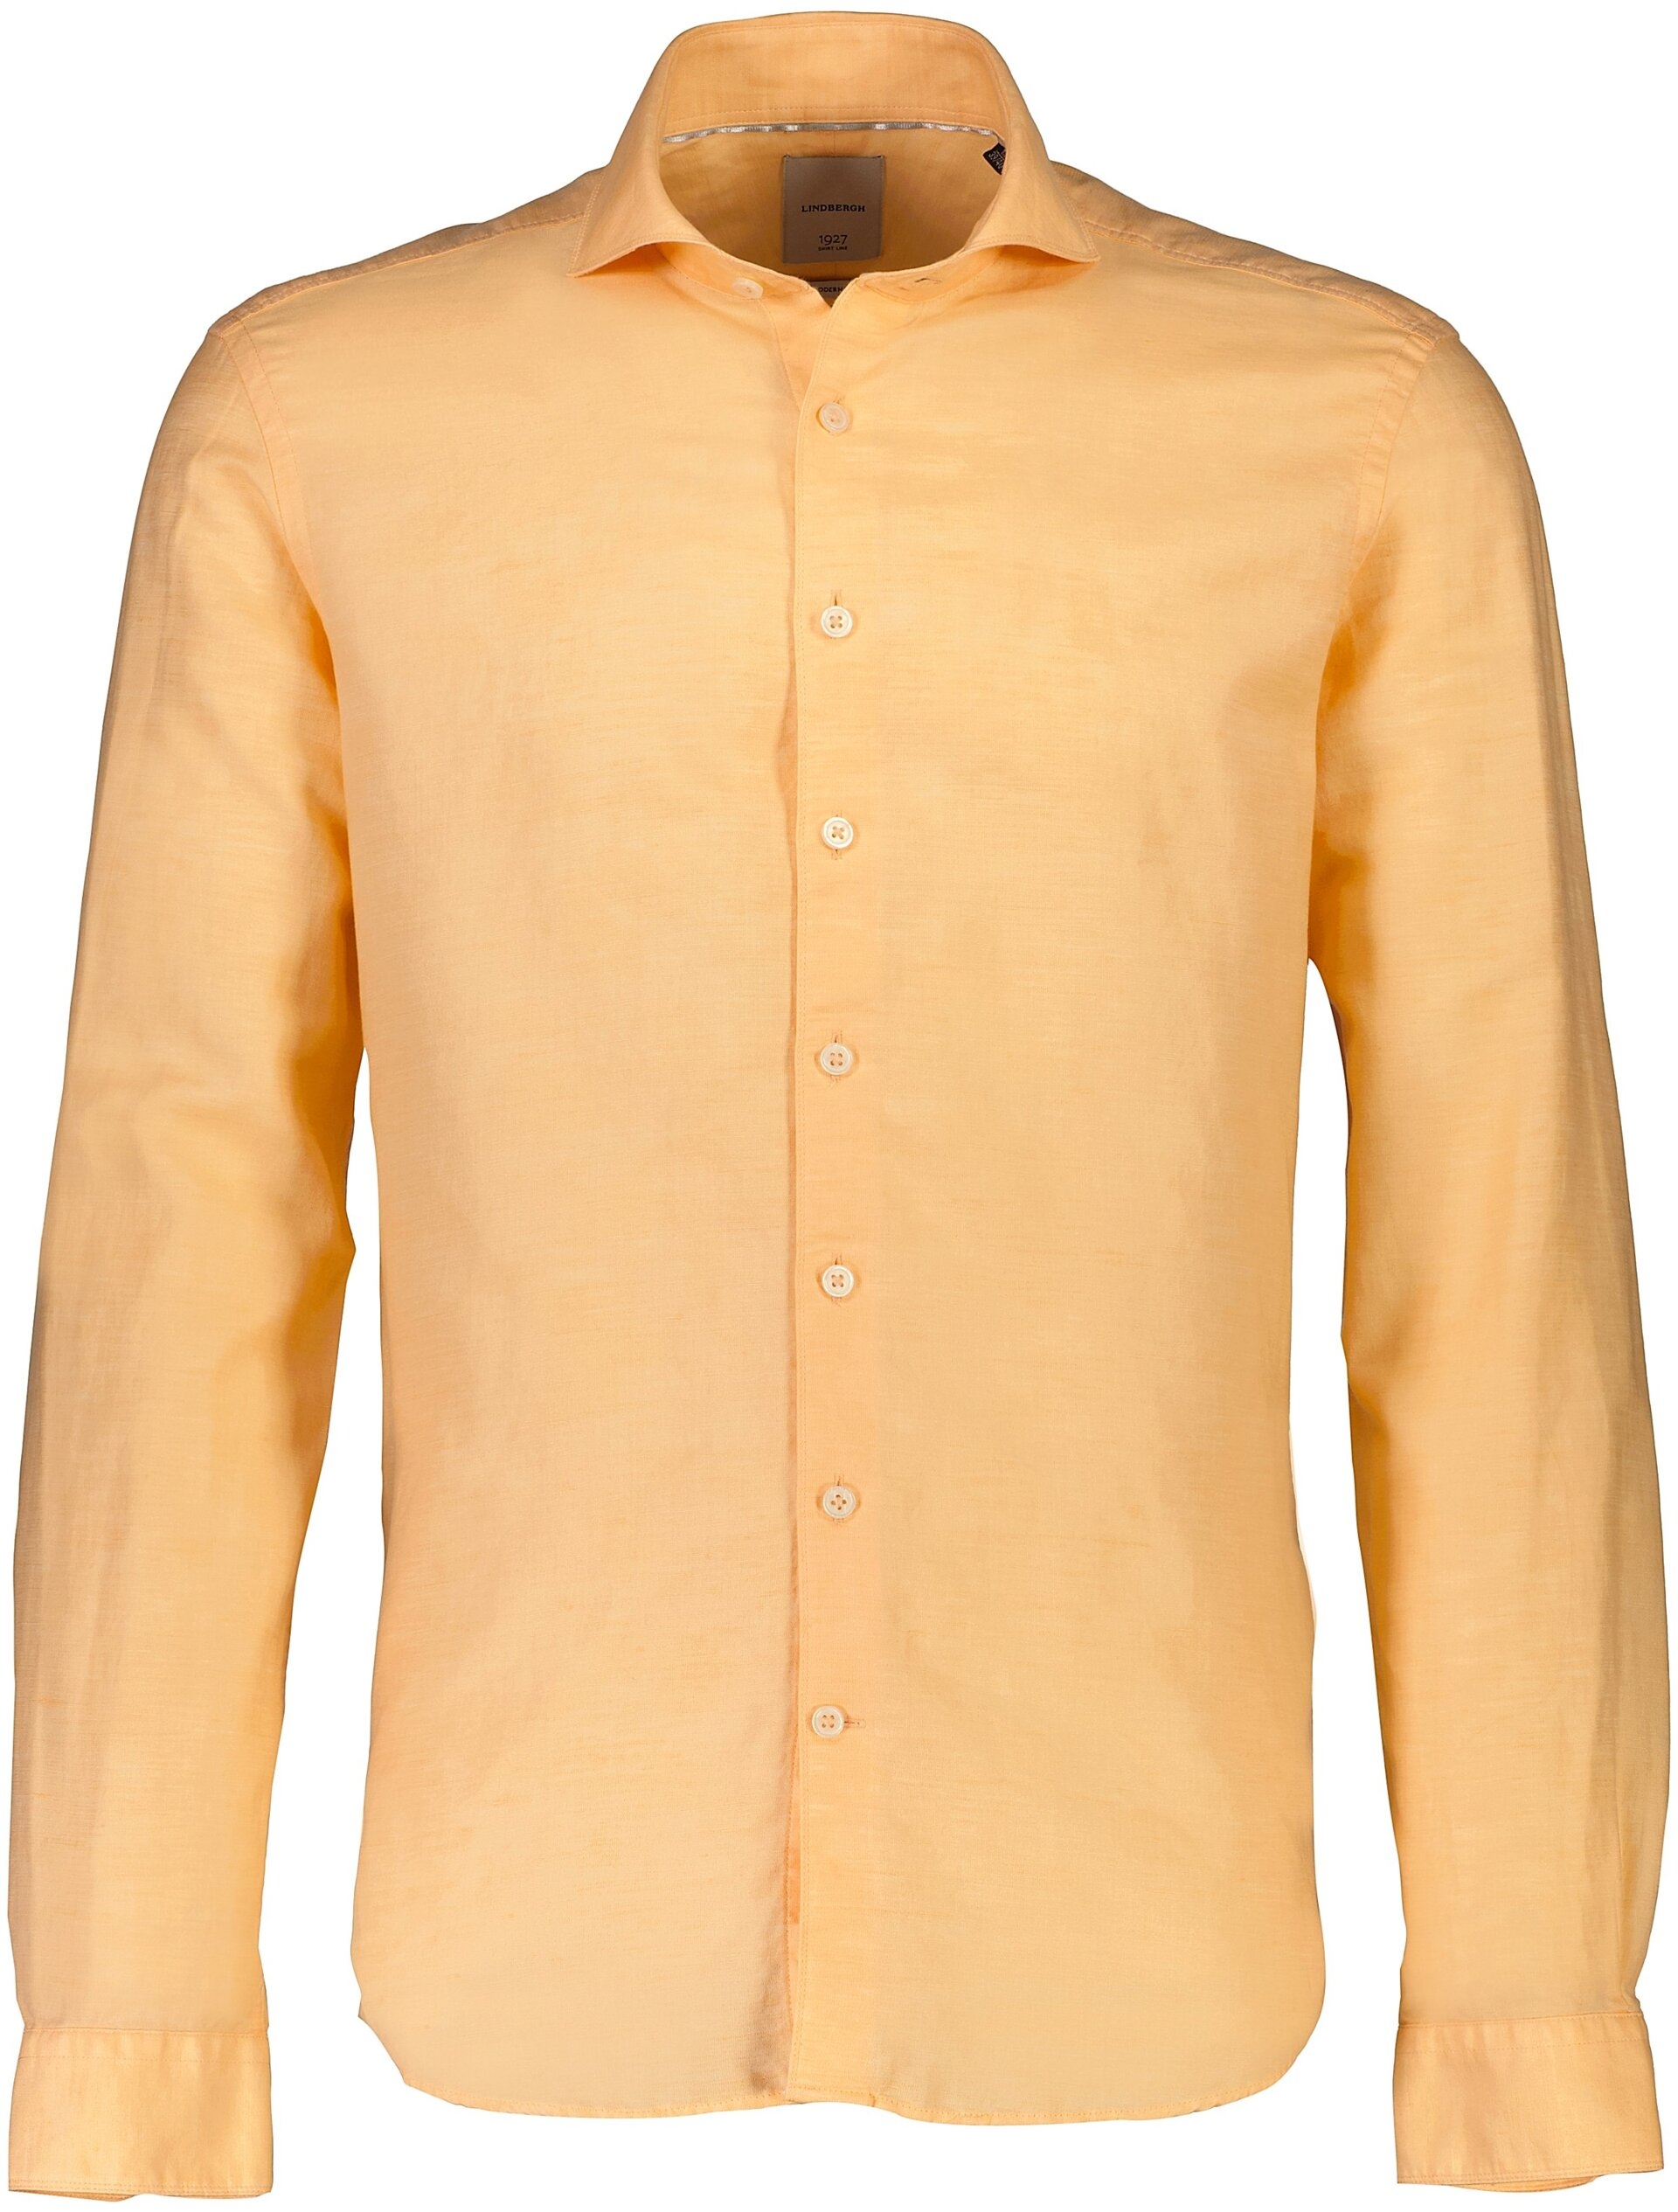 Lindbergh Casual overhemd oranje / lt apricot mel